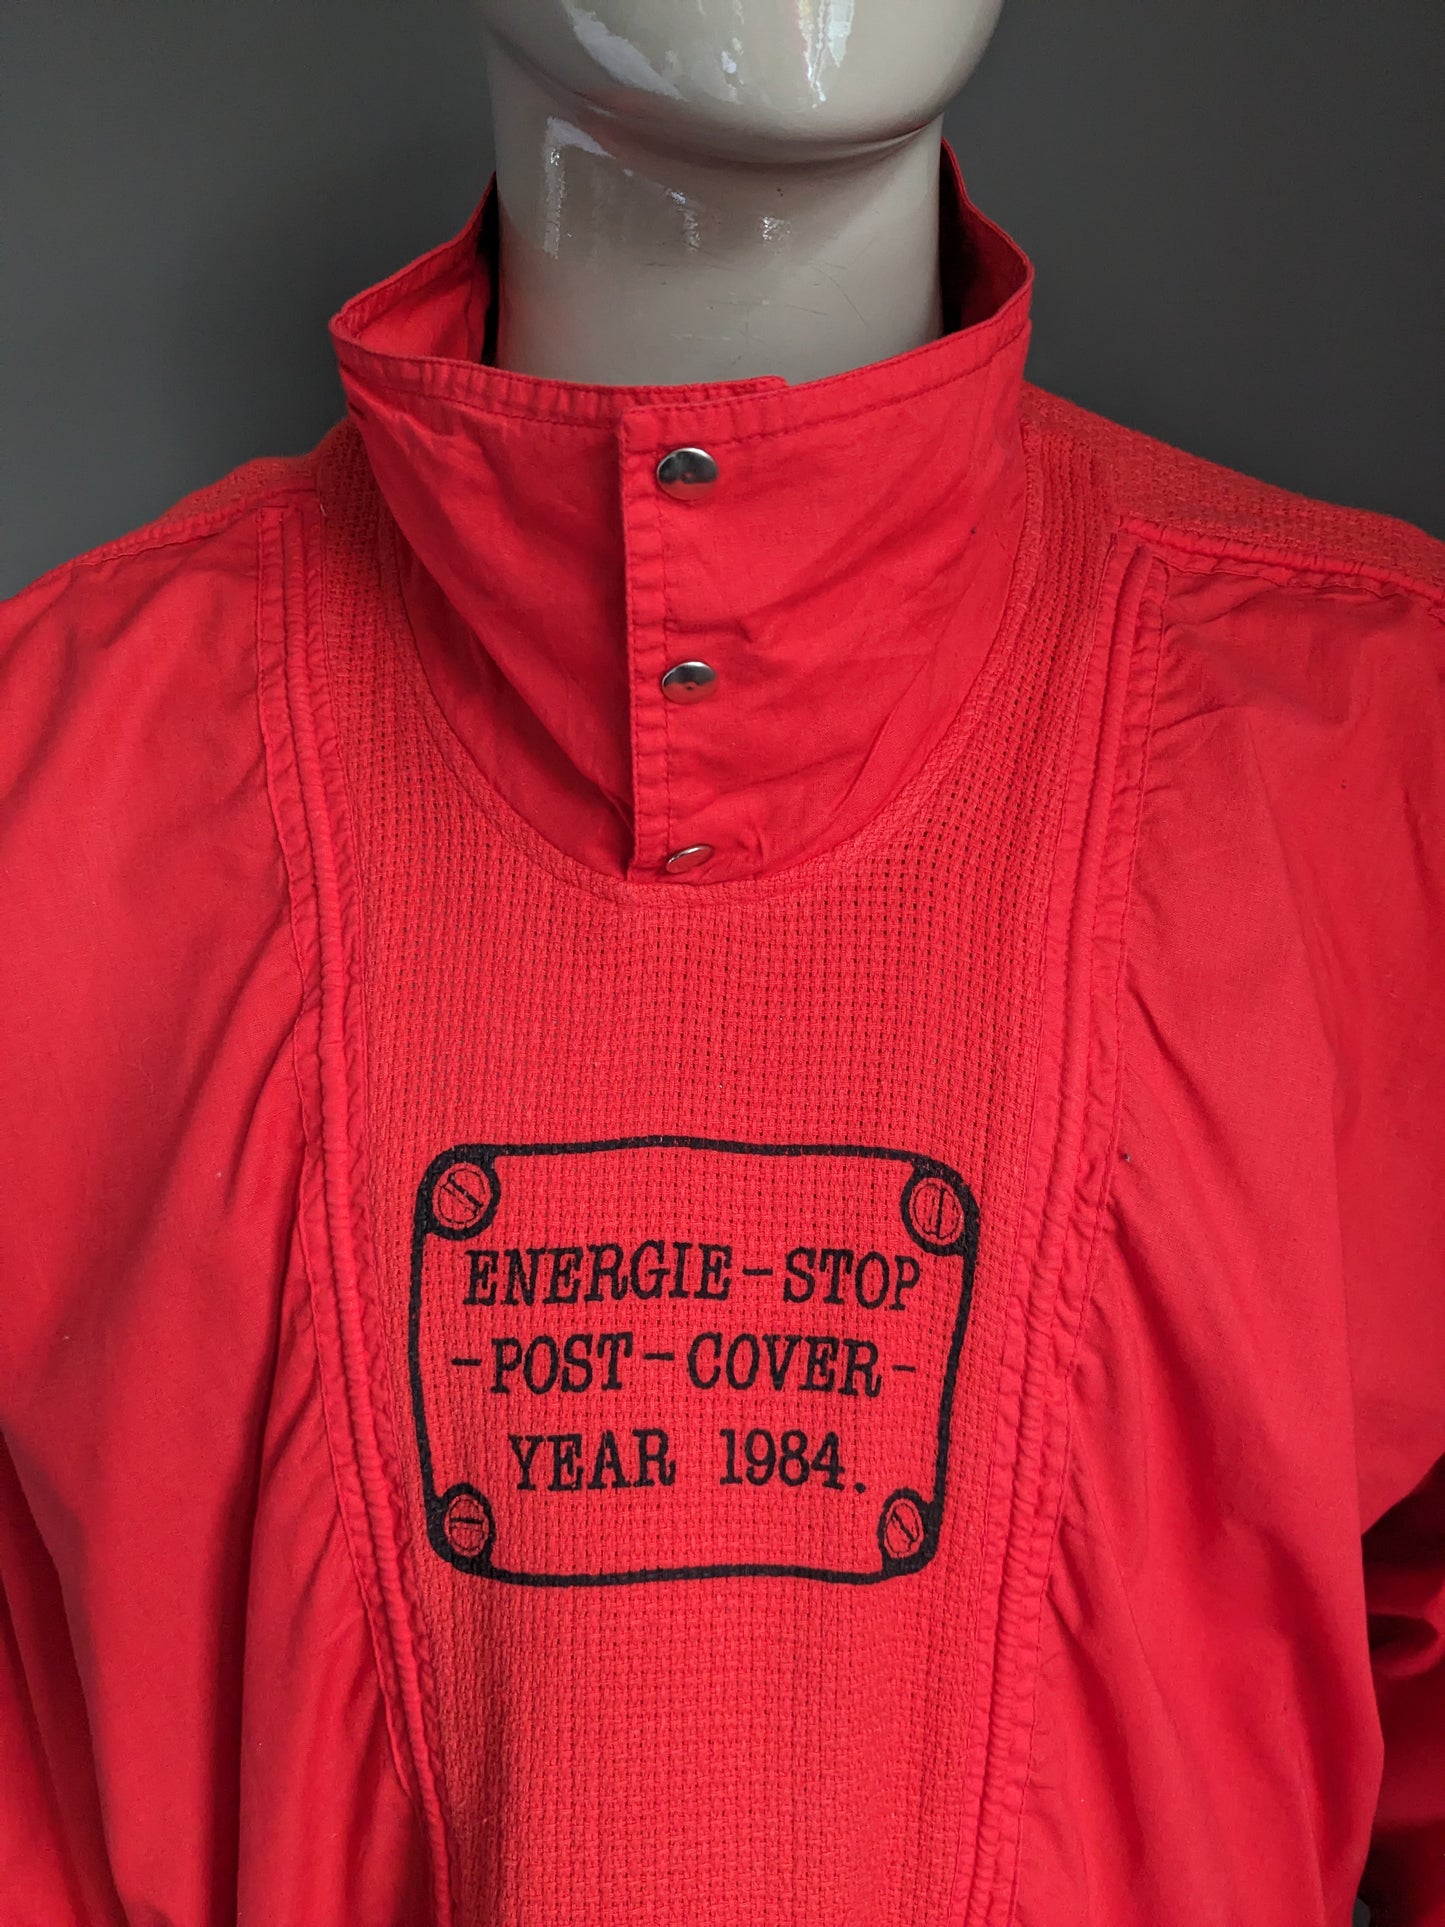 Suéter de polo vintage con banda elástica. Rojo con impresión. Tamaño L / XL.